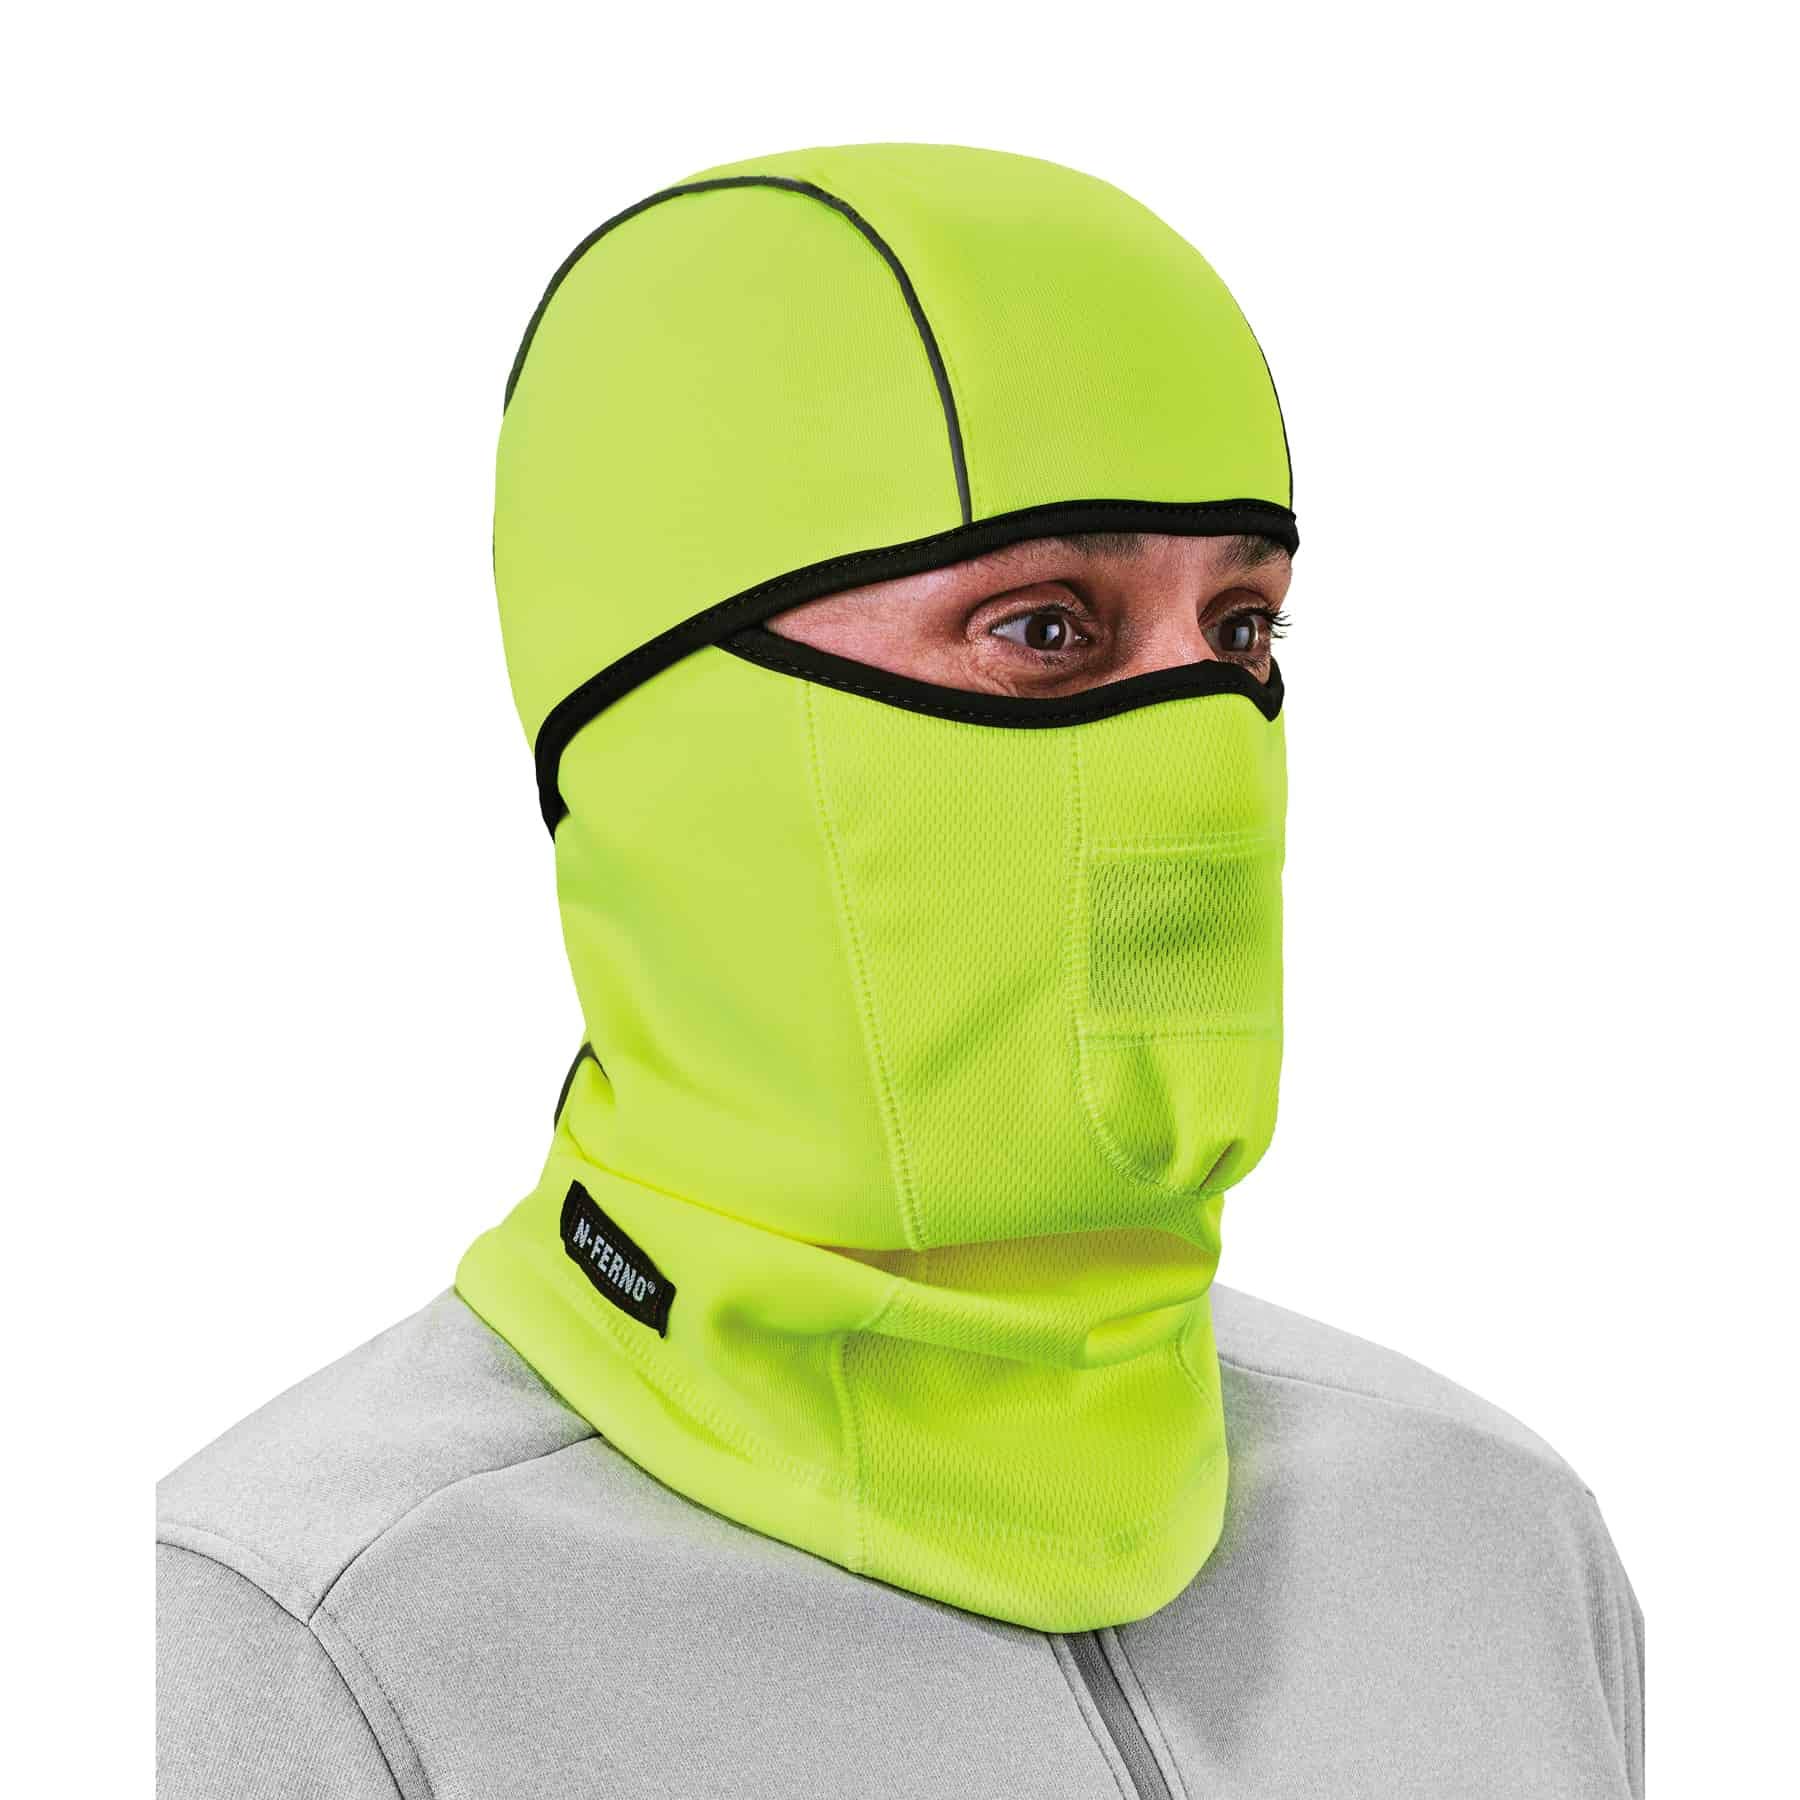 Ergodyne N-Ferno 6823 Balaclava Ski Mask, Wind-Resistant Face Mask, Hinged Design to Wear as Neck Gaiter